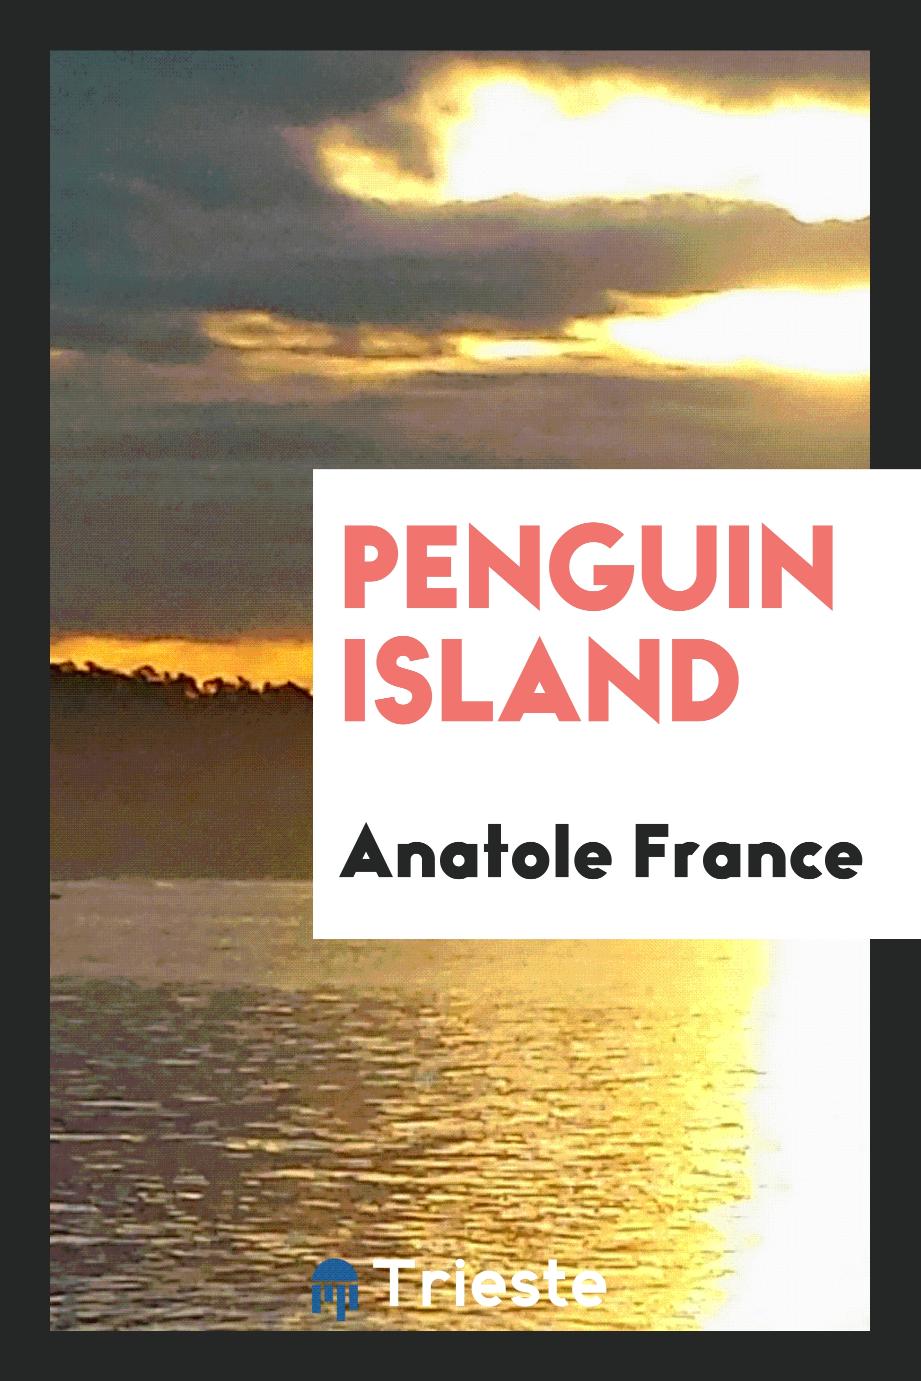 Penguin island